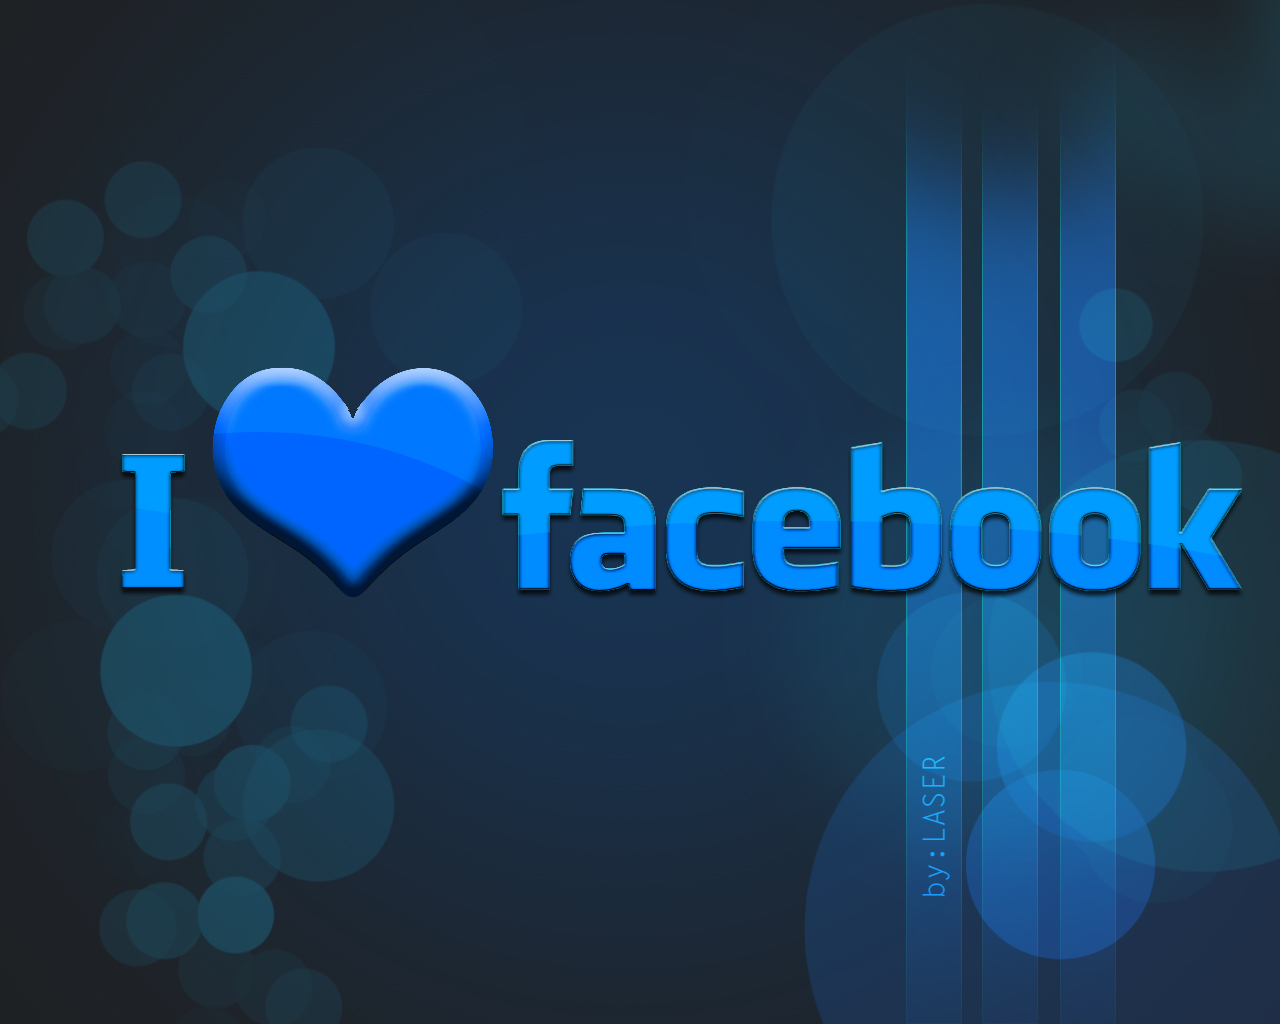 facebook desktop